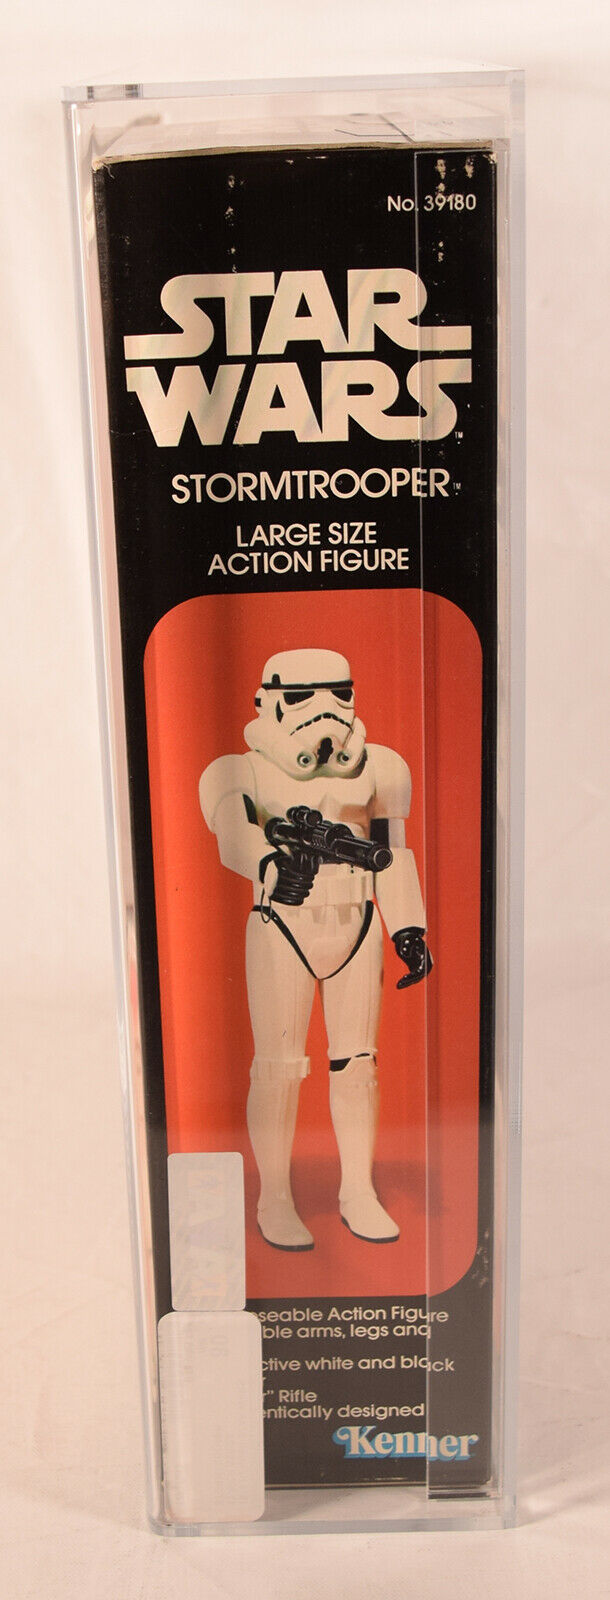 Star Wars Stormtrooper Large Size Action Figure 12" Kenner 1979 AFA 80